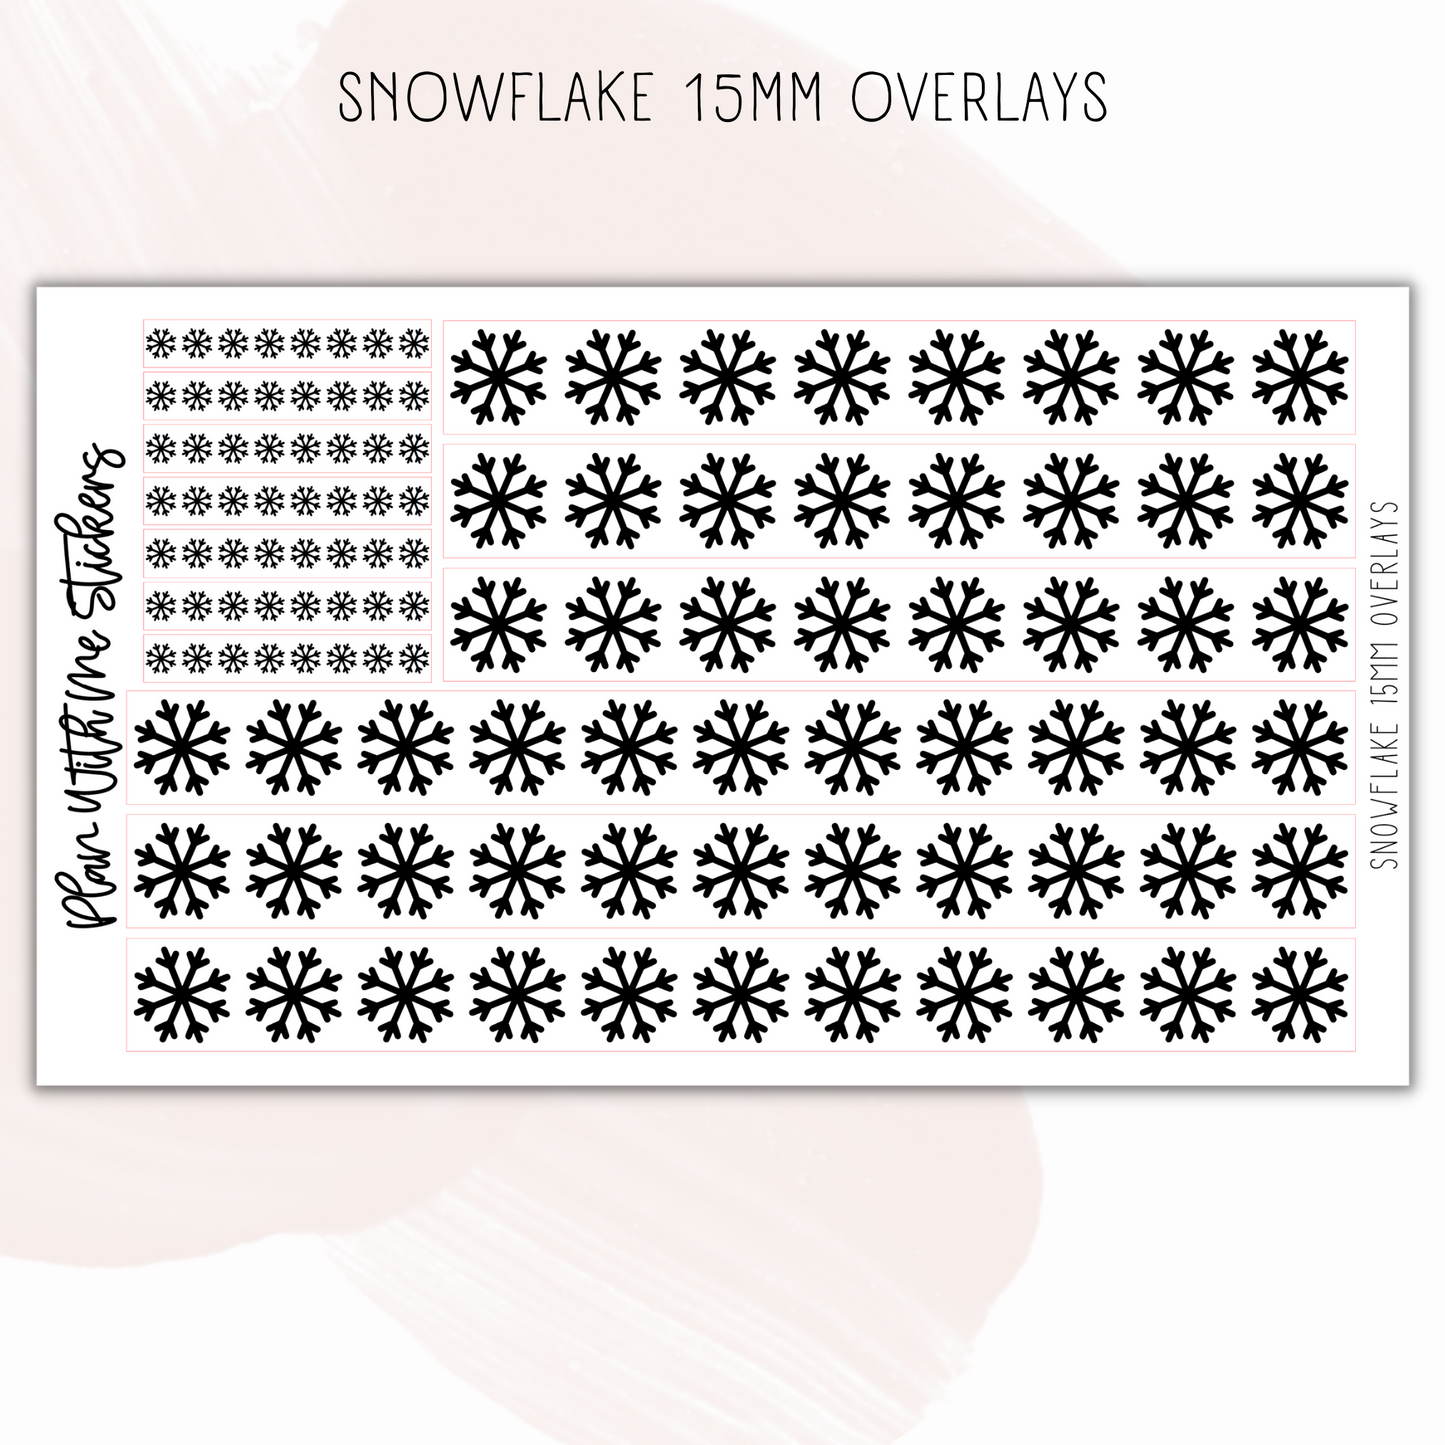 Snowflake 15mm Overlays